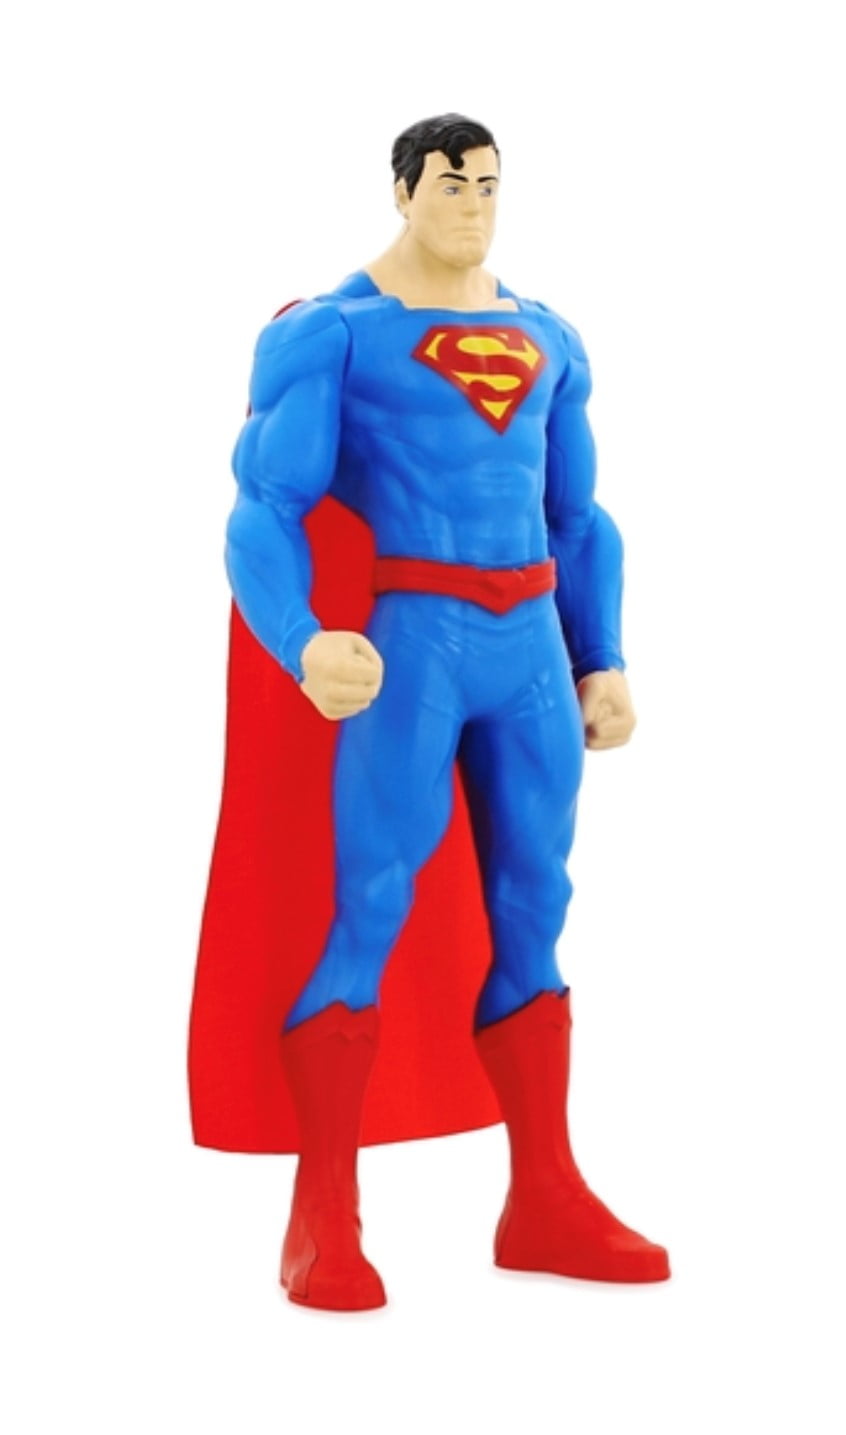 Bendable Super Hero Superman Fidget Stress Relief Toy for Kids DC Comics 